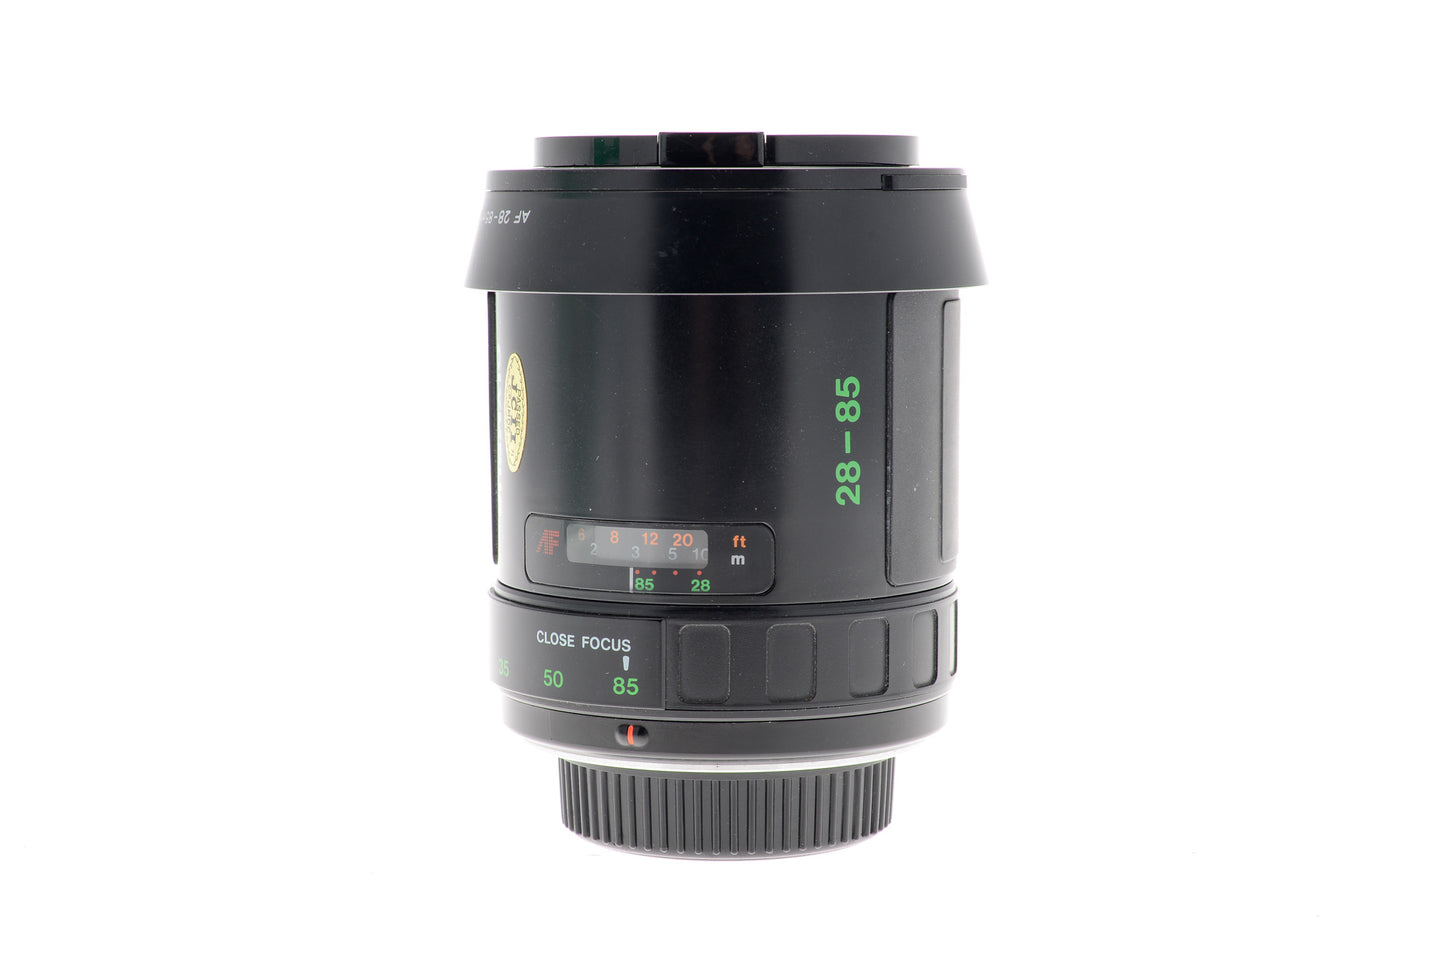 Olympus 28-85mm f3.5-4.5 AF - Lens